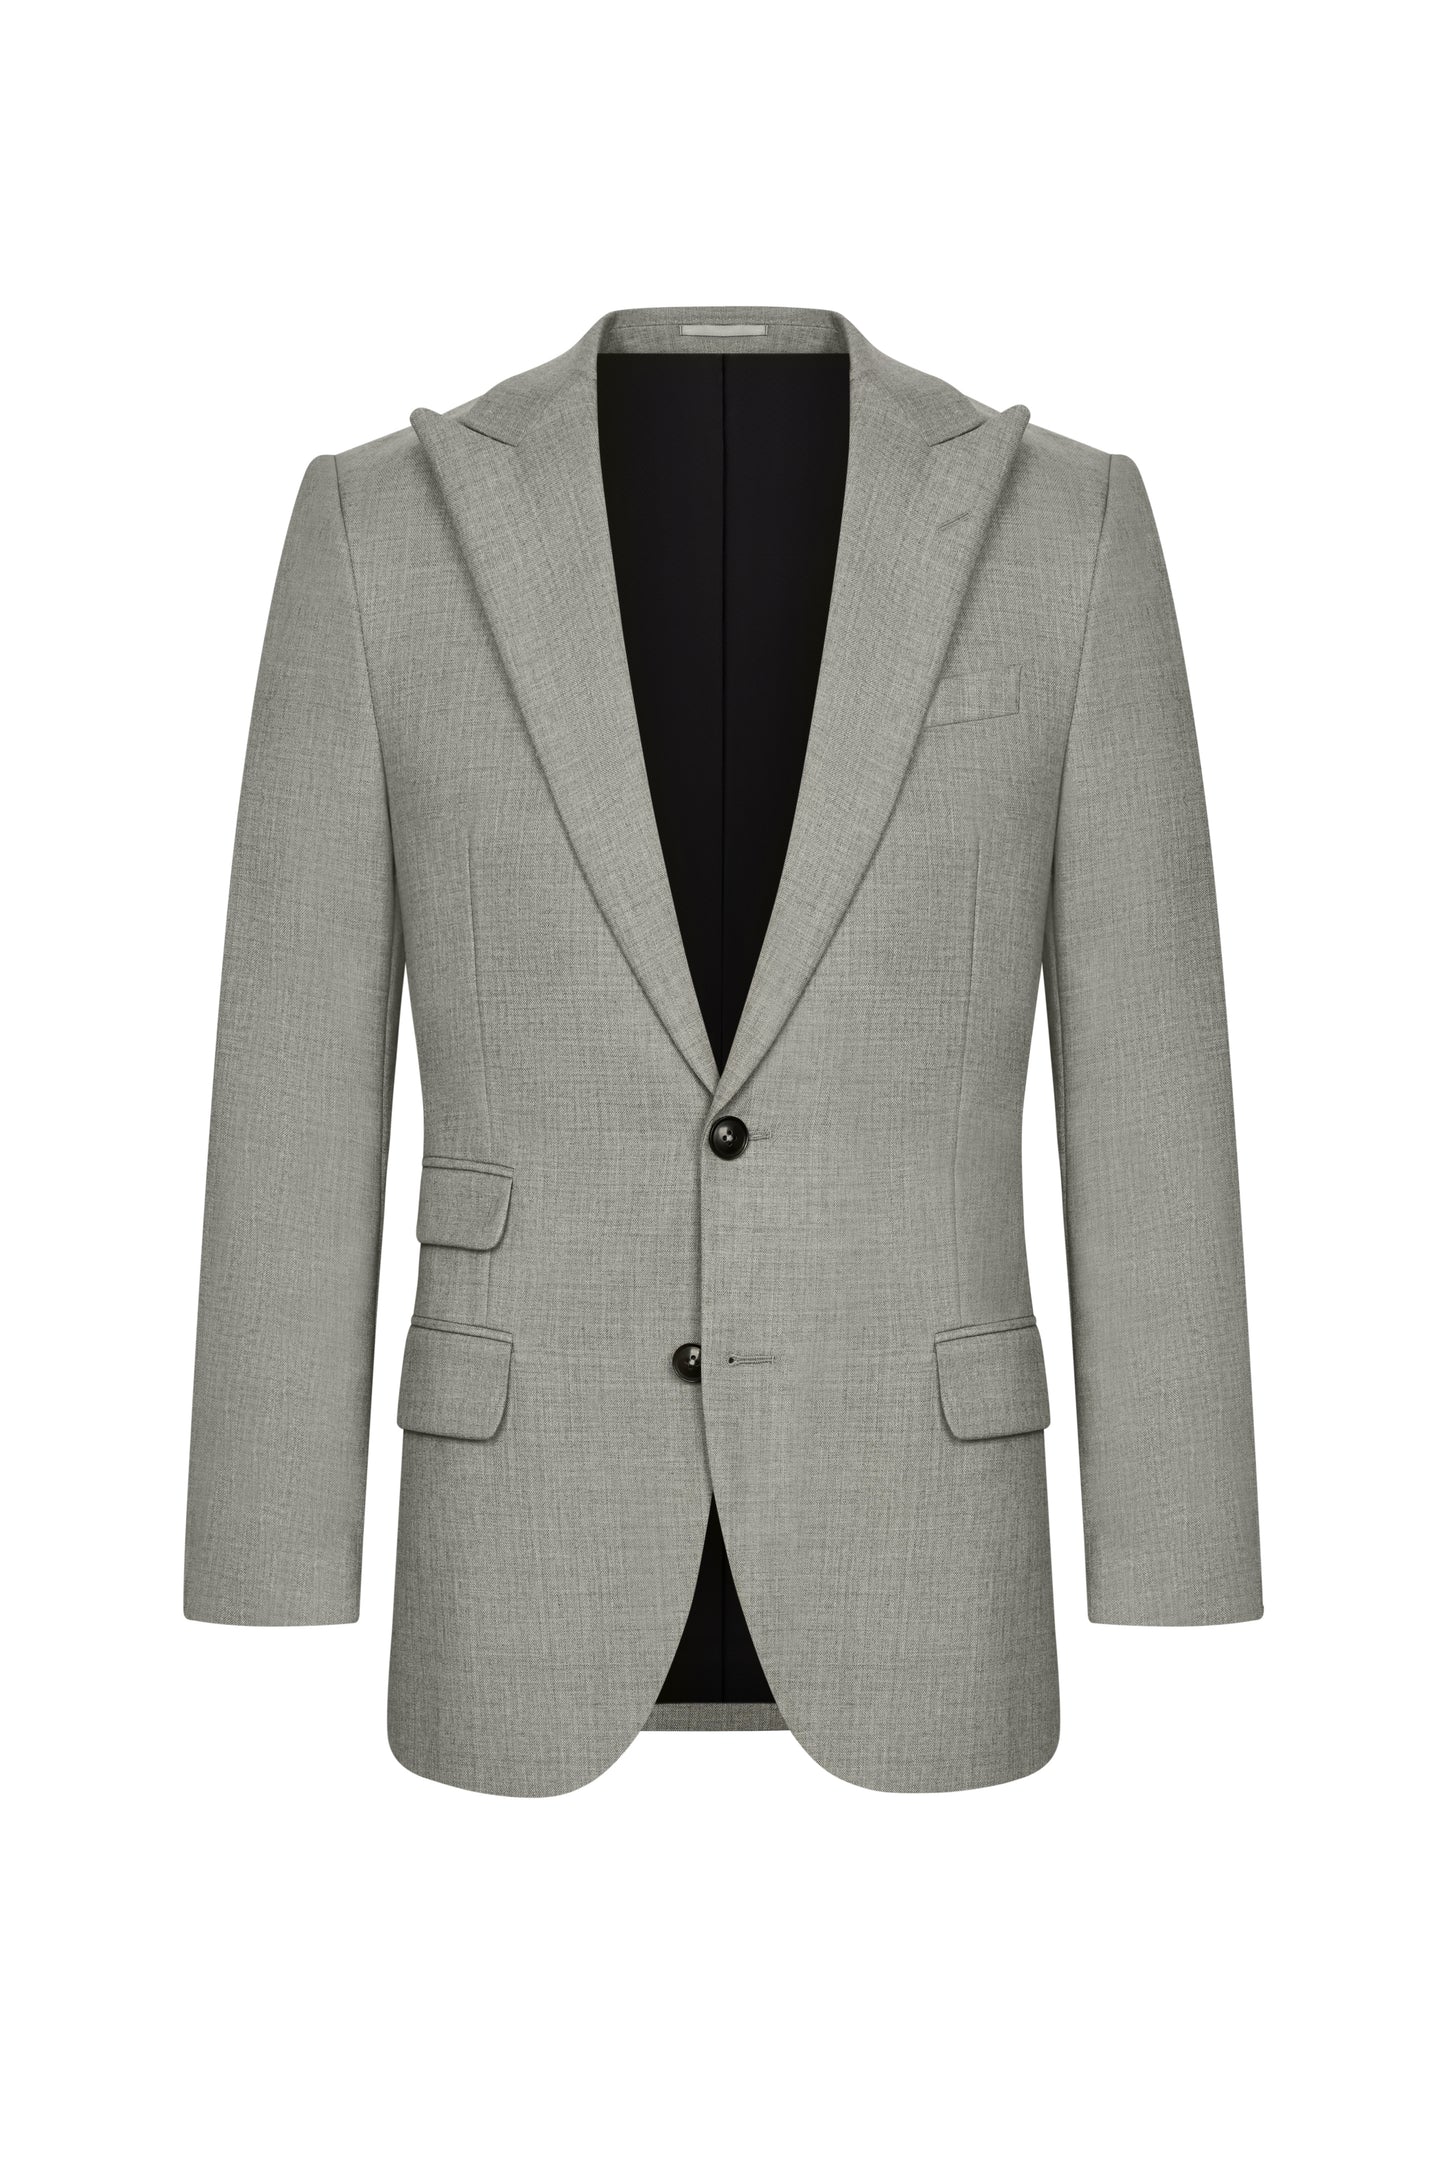 Holland & Sherry Light Grey Hopsack Custom Suit